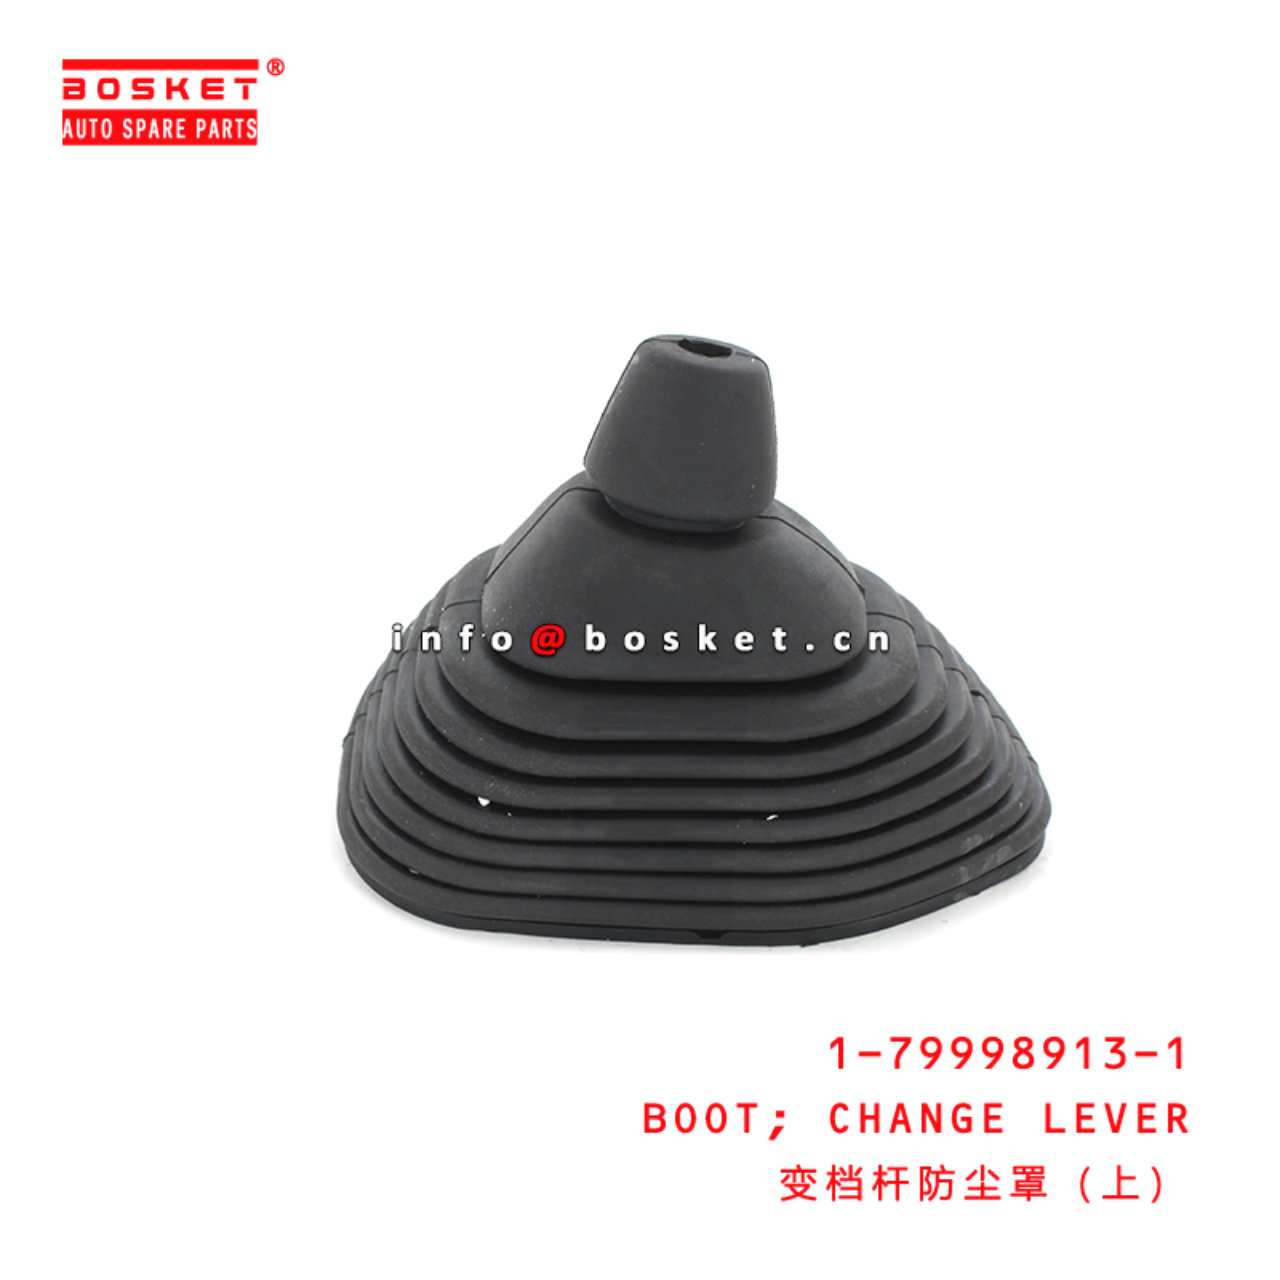 1-79998913-1 Change Lever Boot Suitable for ISUZU 700P 4HK1 1799989131